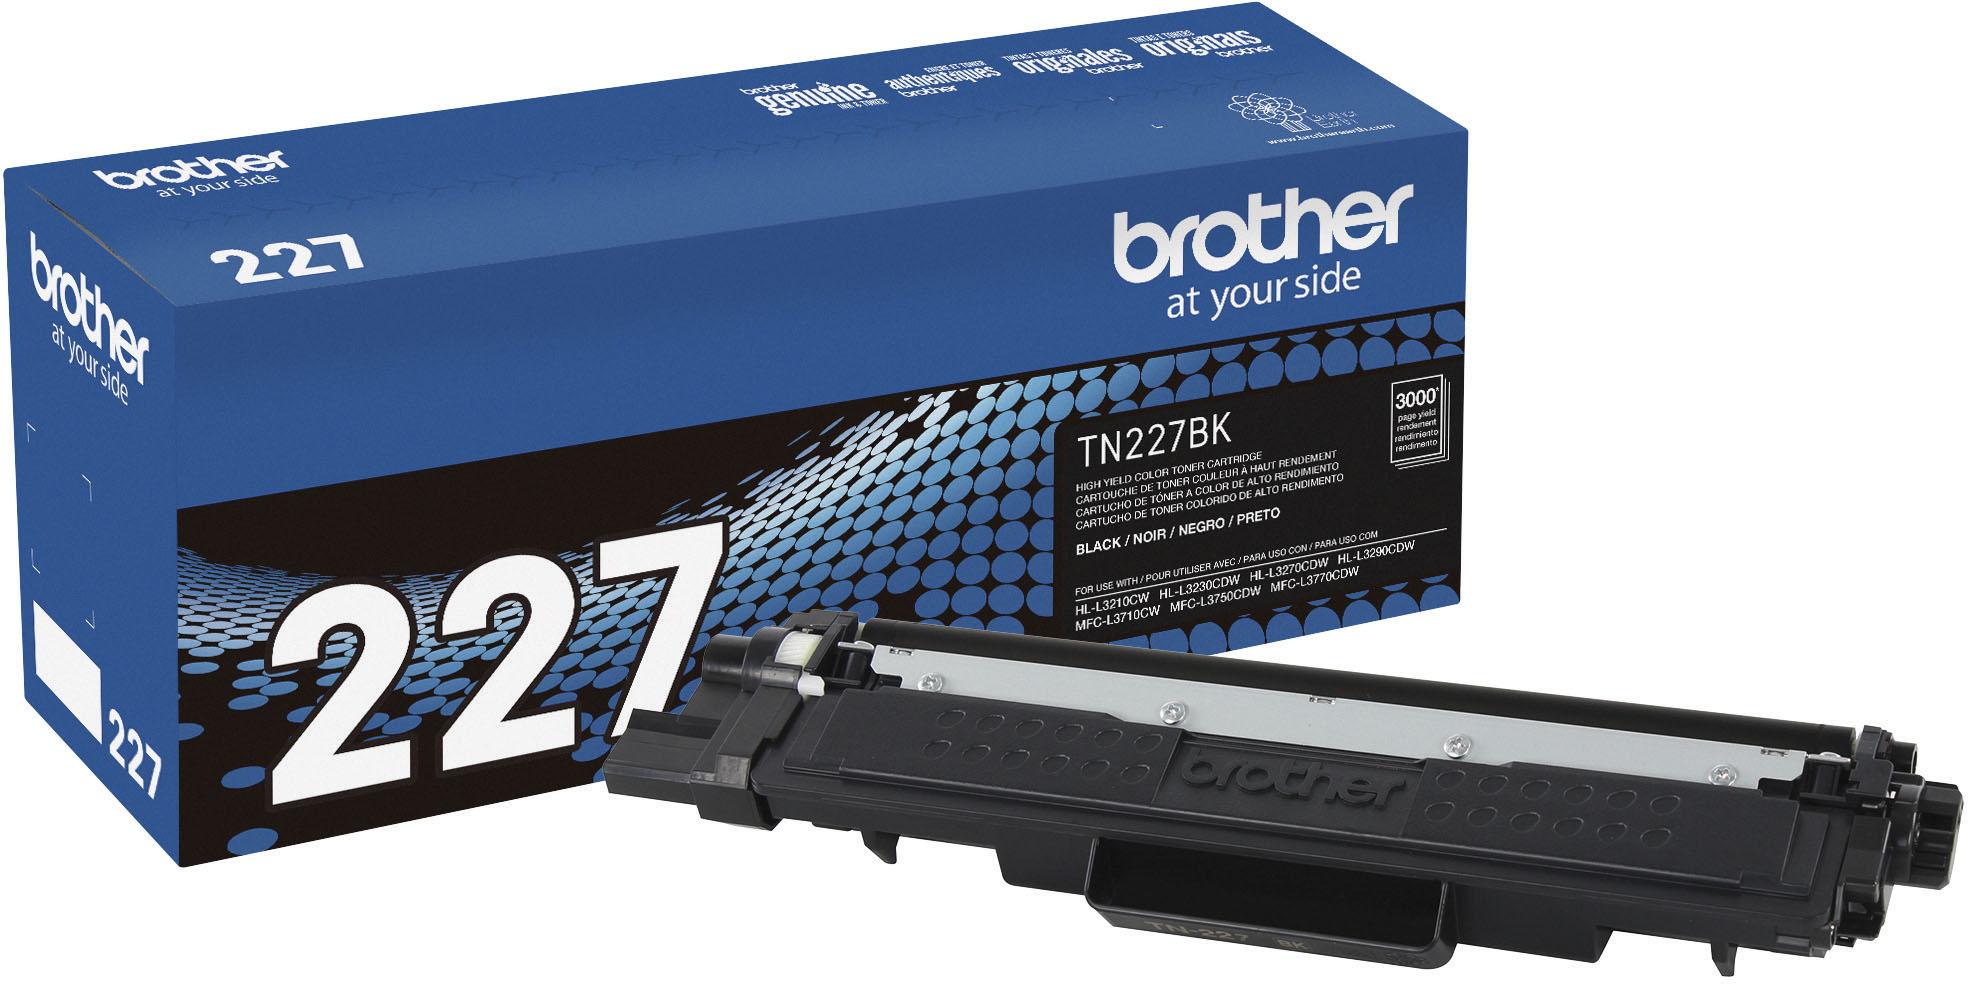 True Image 5-Pack Compatible Toner Cartridge for Brother TN-227BK TN-227  MFC-L3710CW MFC-L3770CDW MFC-L3750CDW HL-L3210CW HL-L3230CDW HL-L3290CDW  Printer(2*Black,Cyan,Magenta,Yellow) 